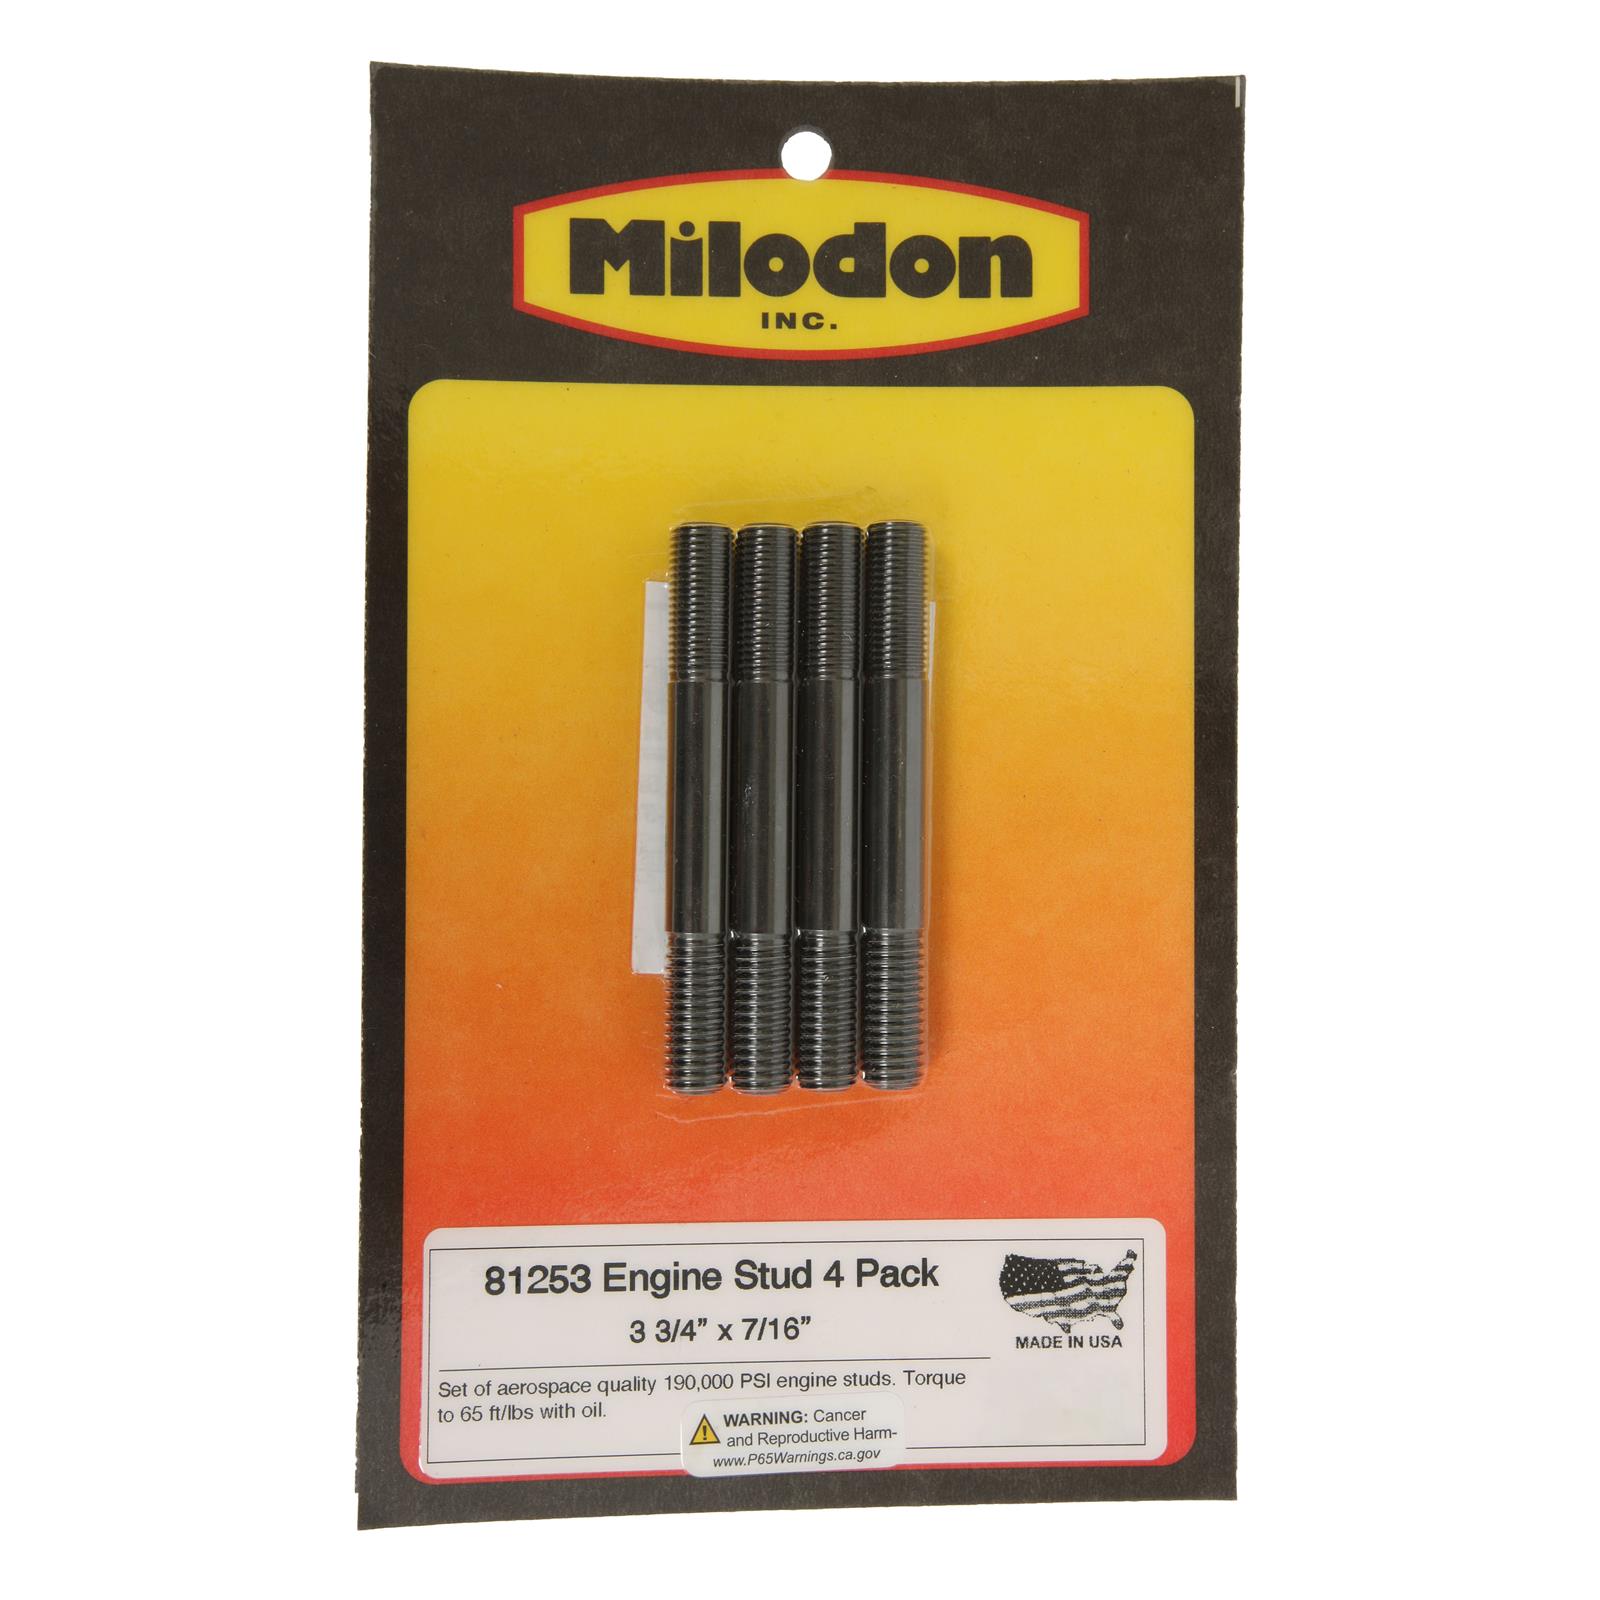 Milodon 4 x 1/2 Studs 4 Pack 81275